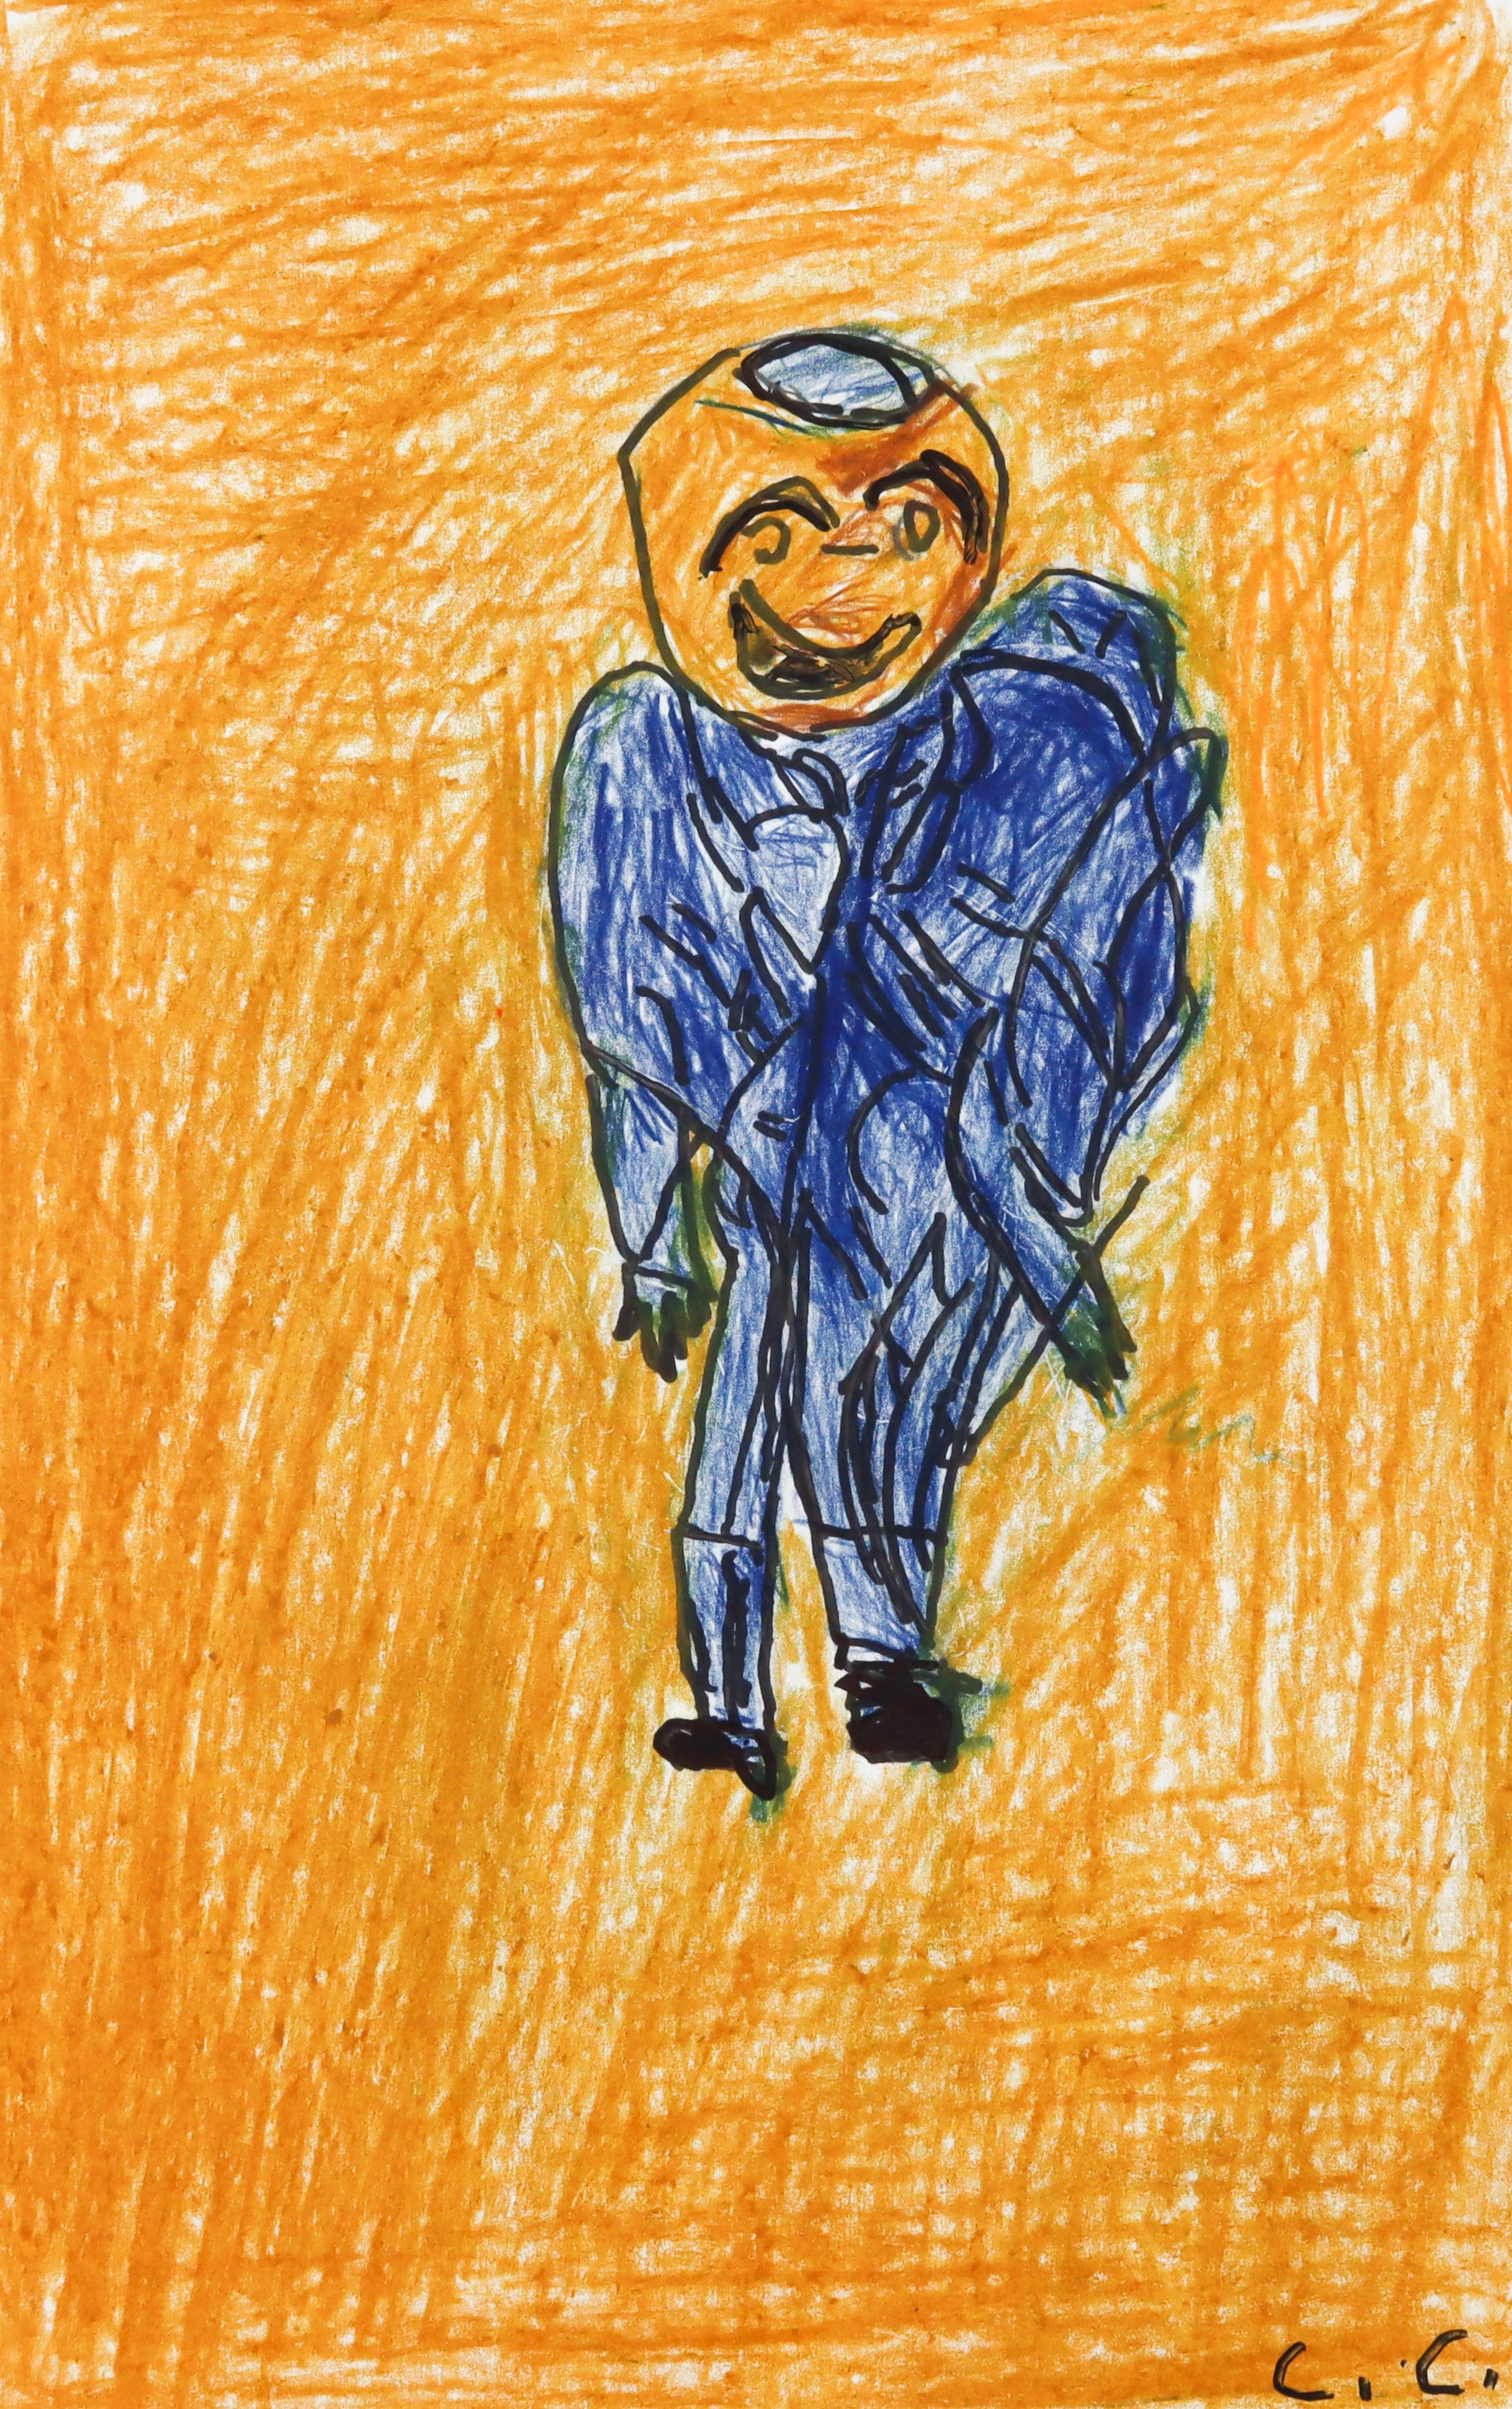 Man in the Blue Suit by Calvin "Sonny" Clarke